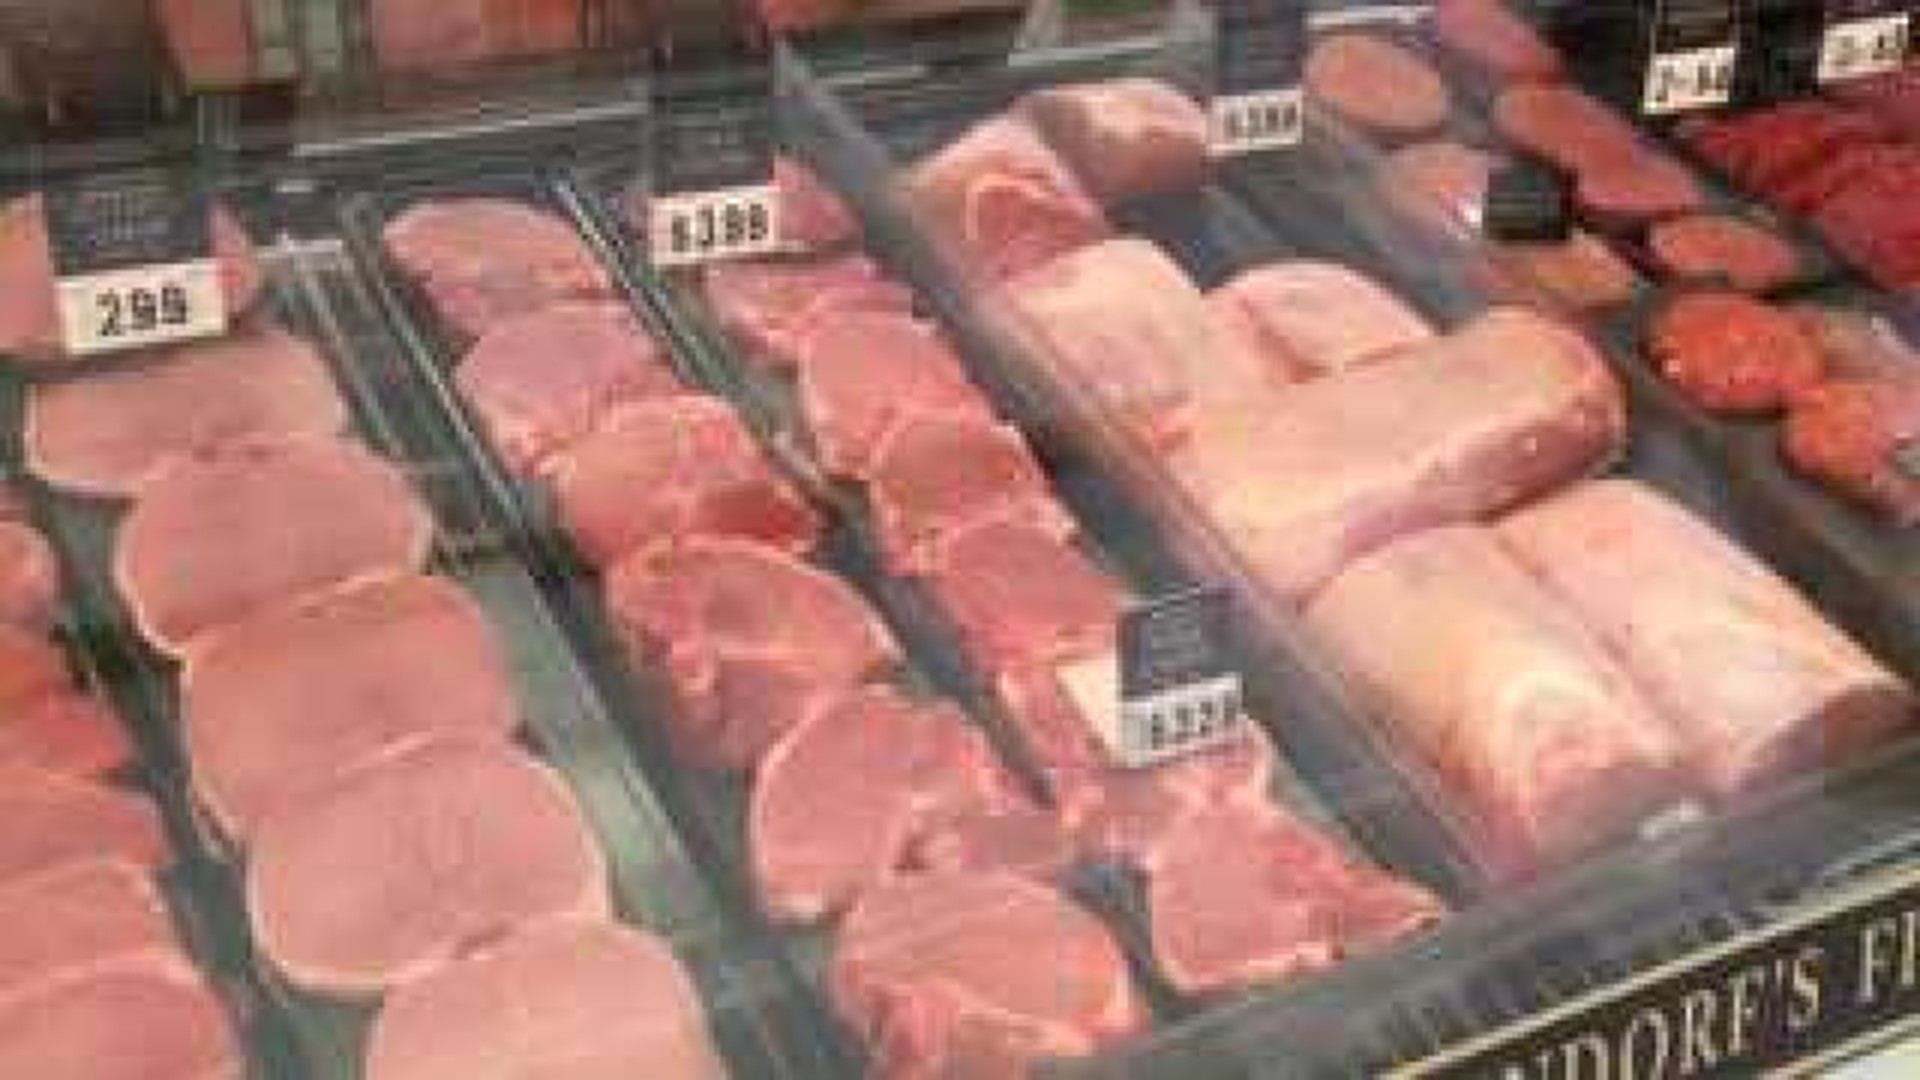 QCMB: Meat Counter